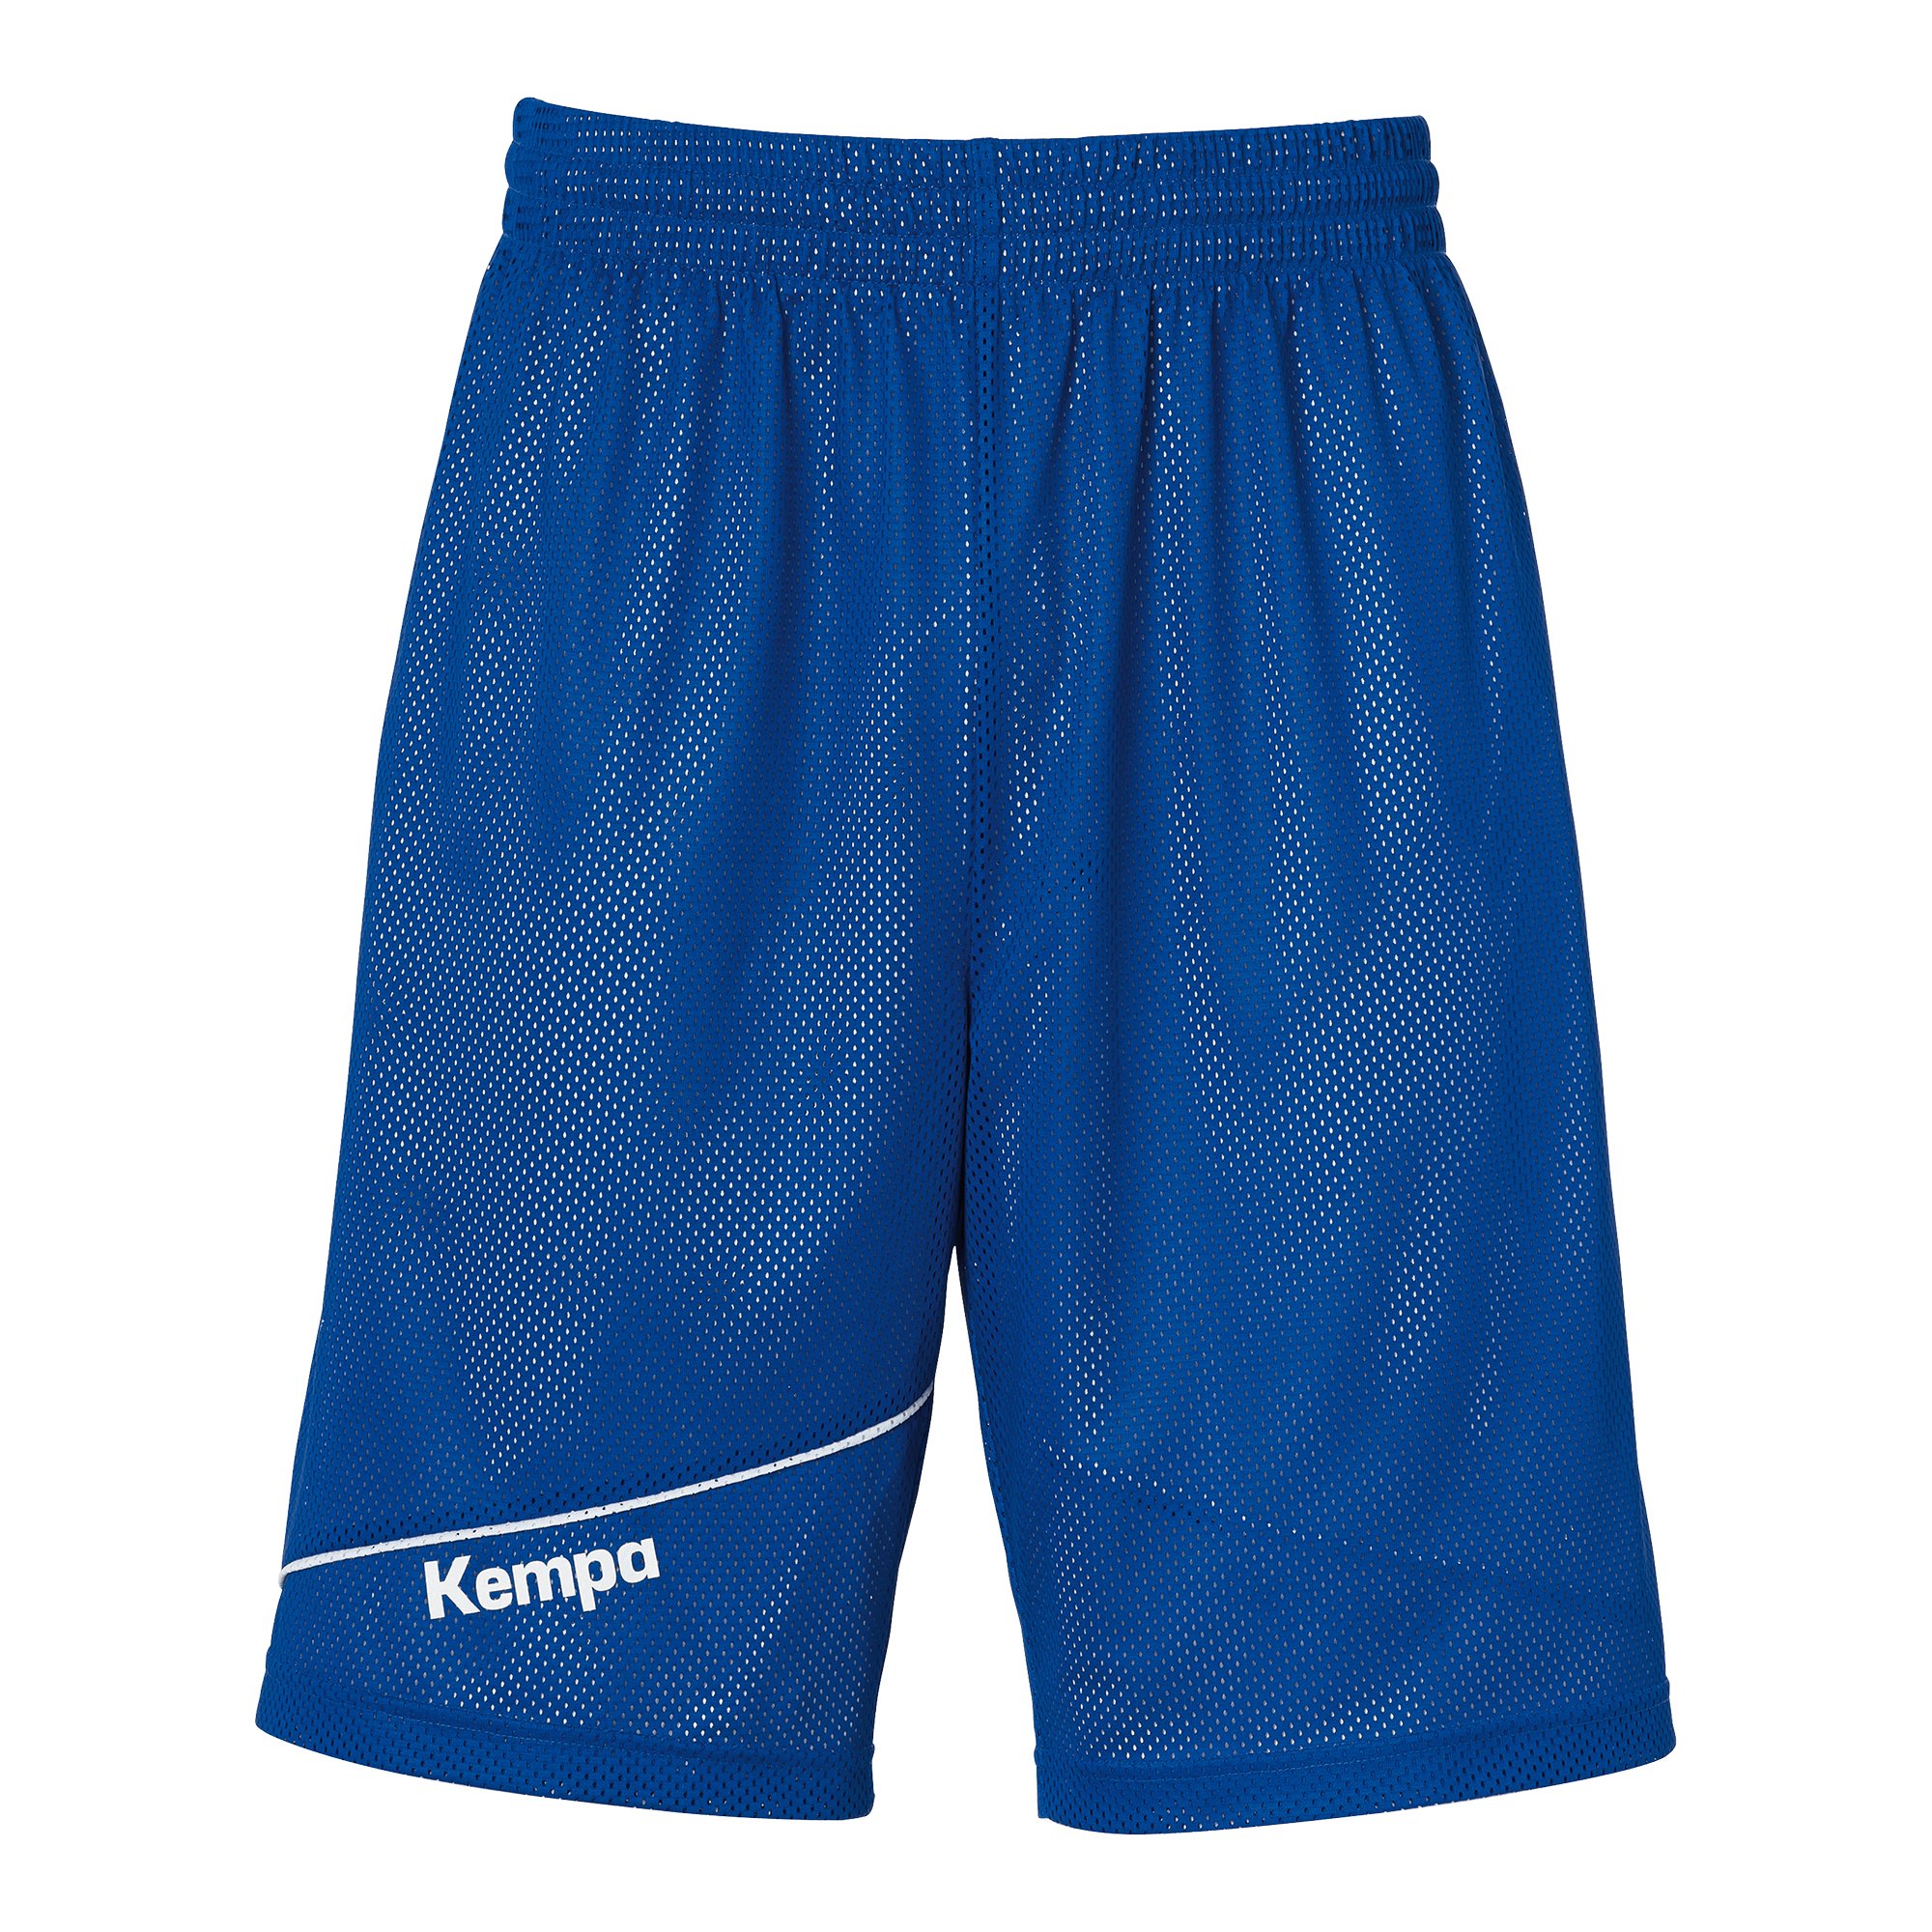 Kempa Reversible Shorts